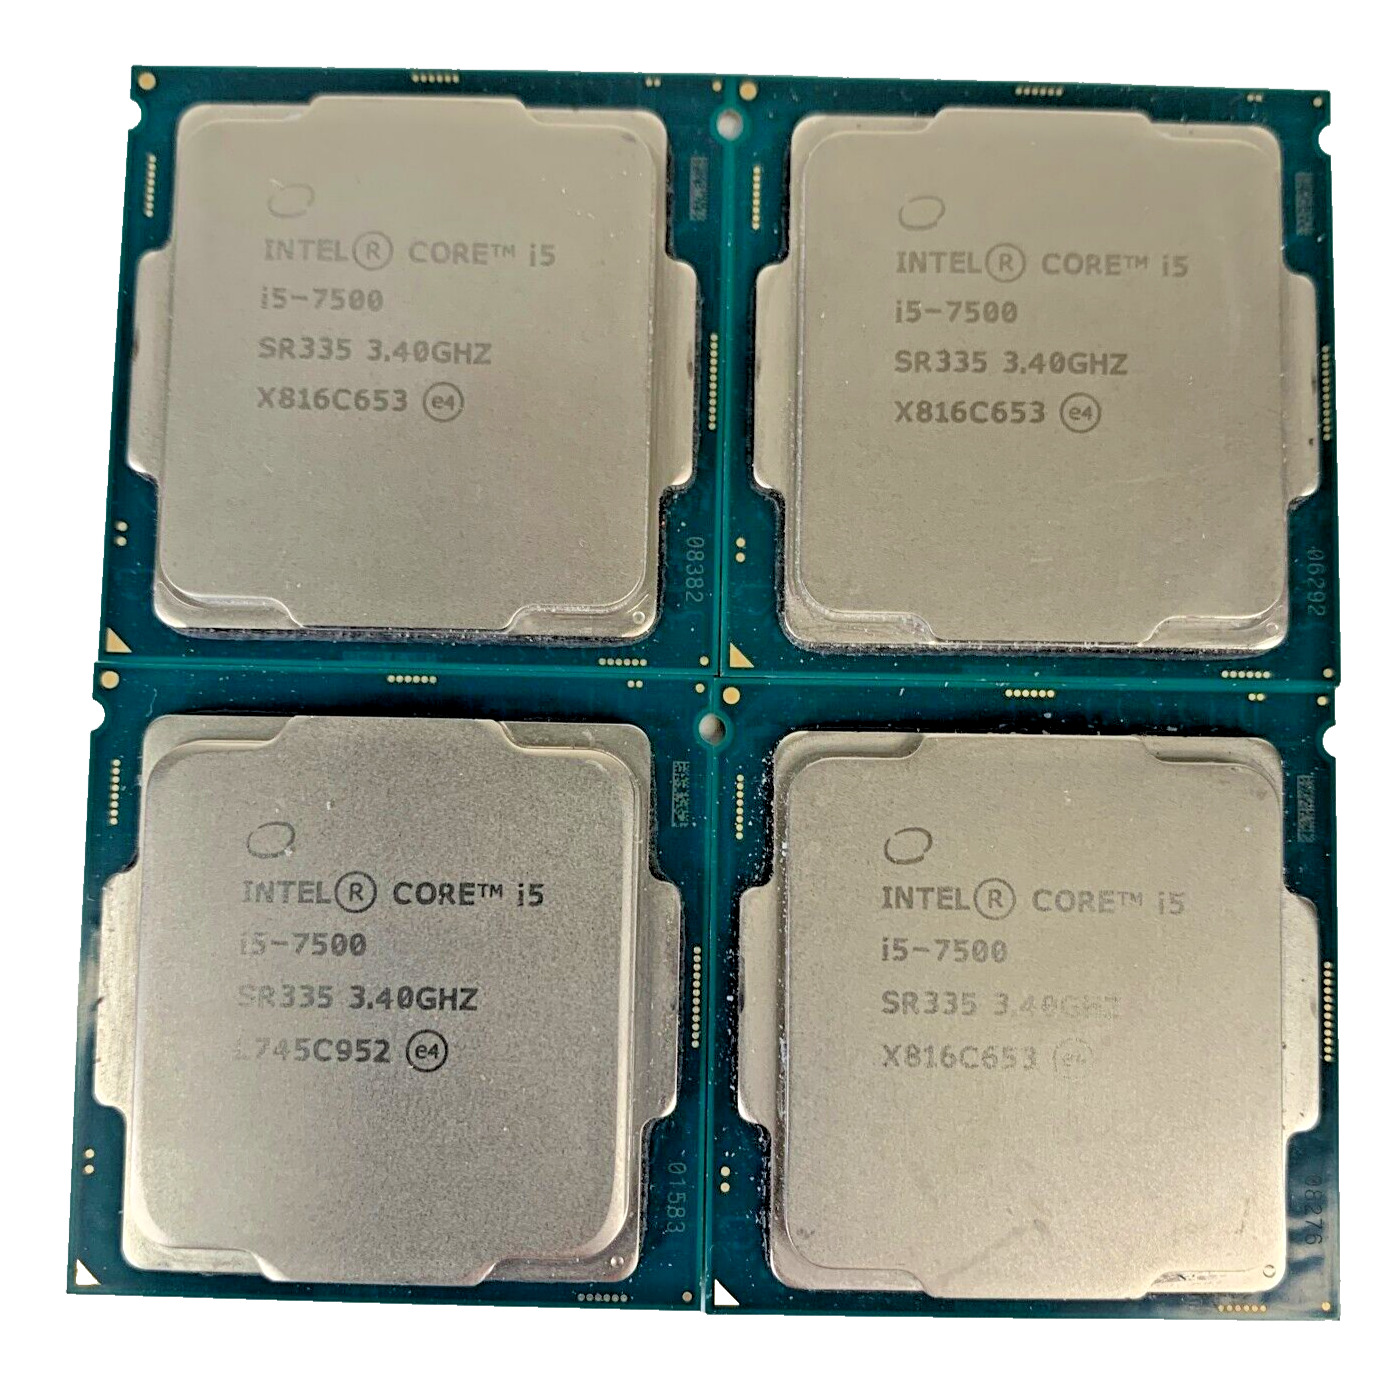 (Lot of 4) Intel Core i5-7500 3.40GHz 6MB Cache 8 GT/s SR335 CPU Processor